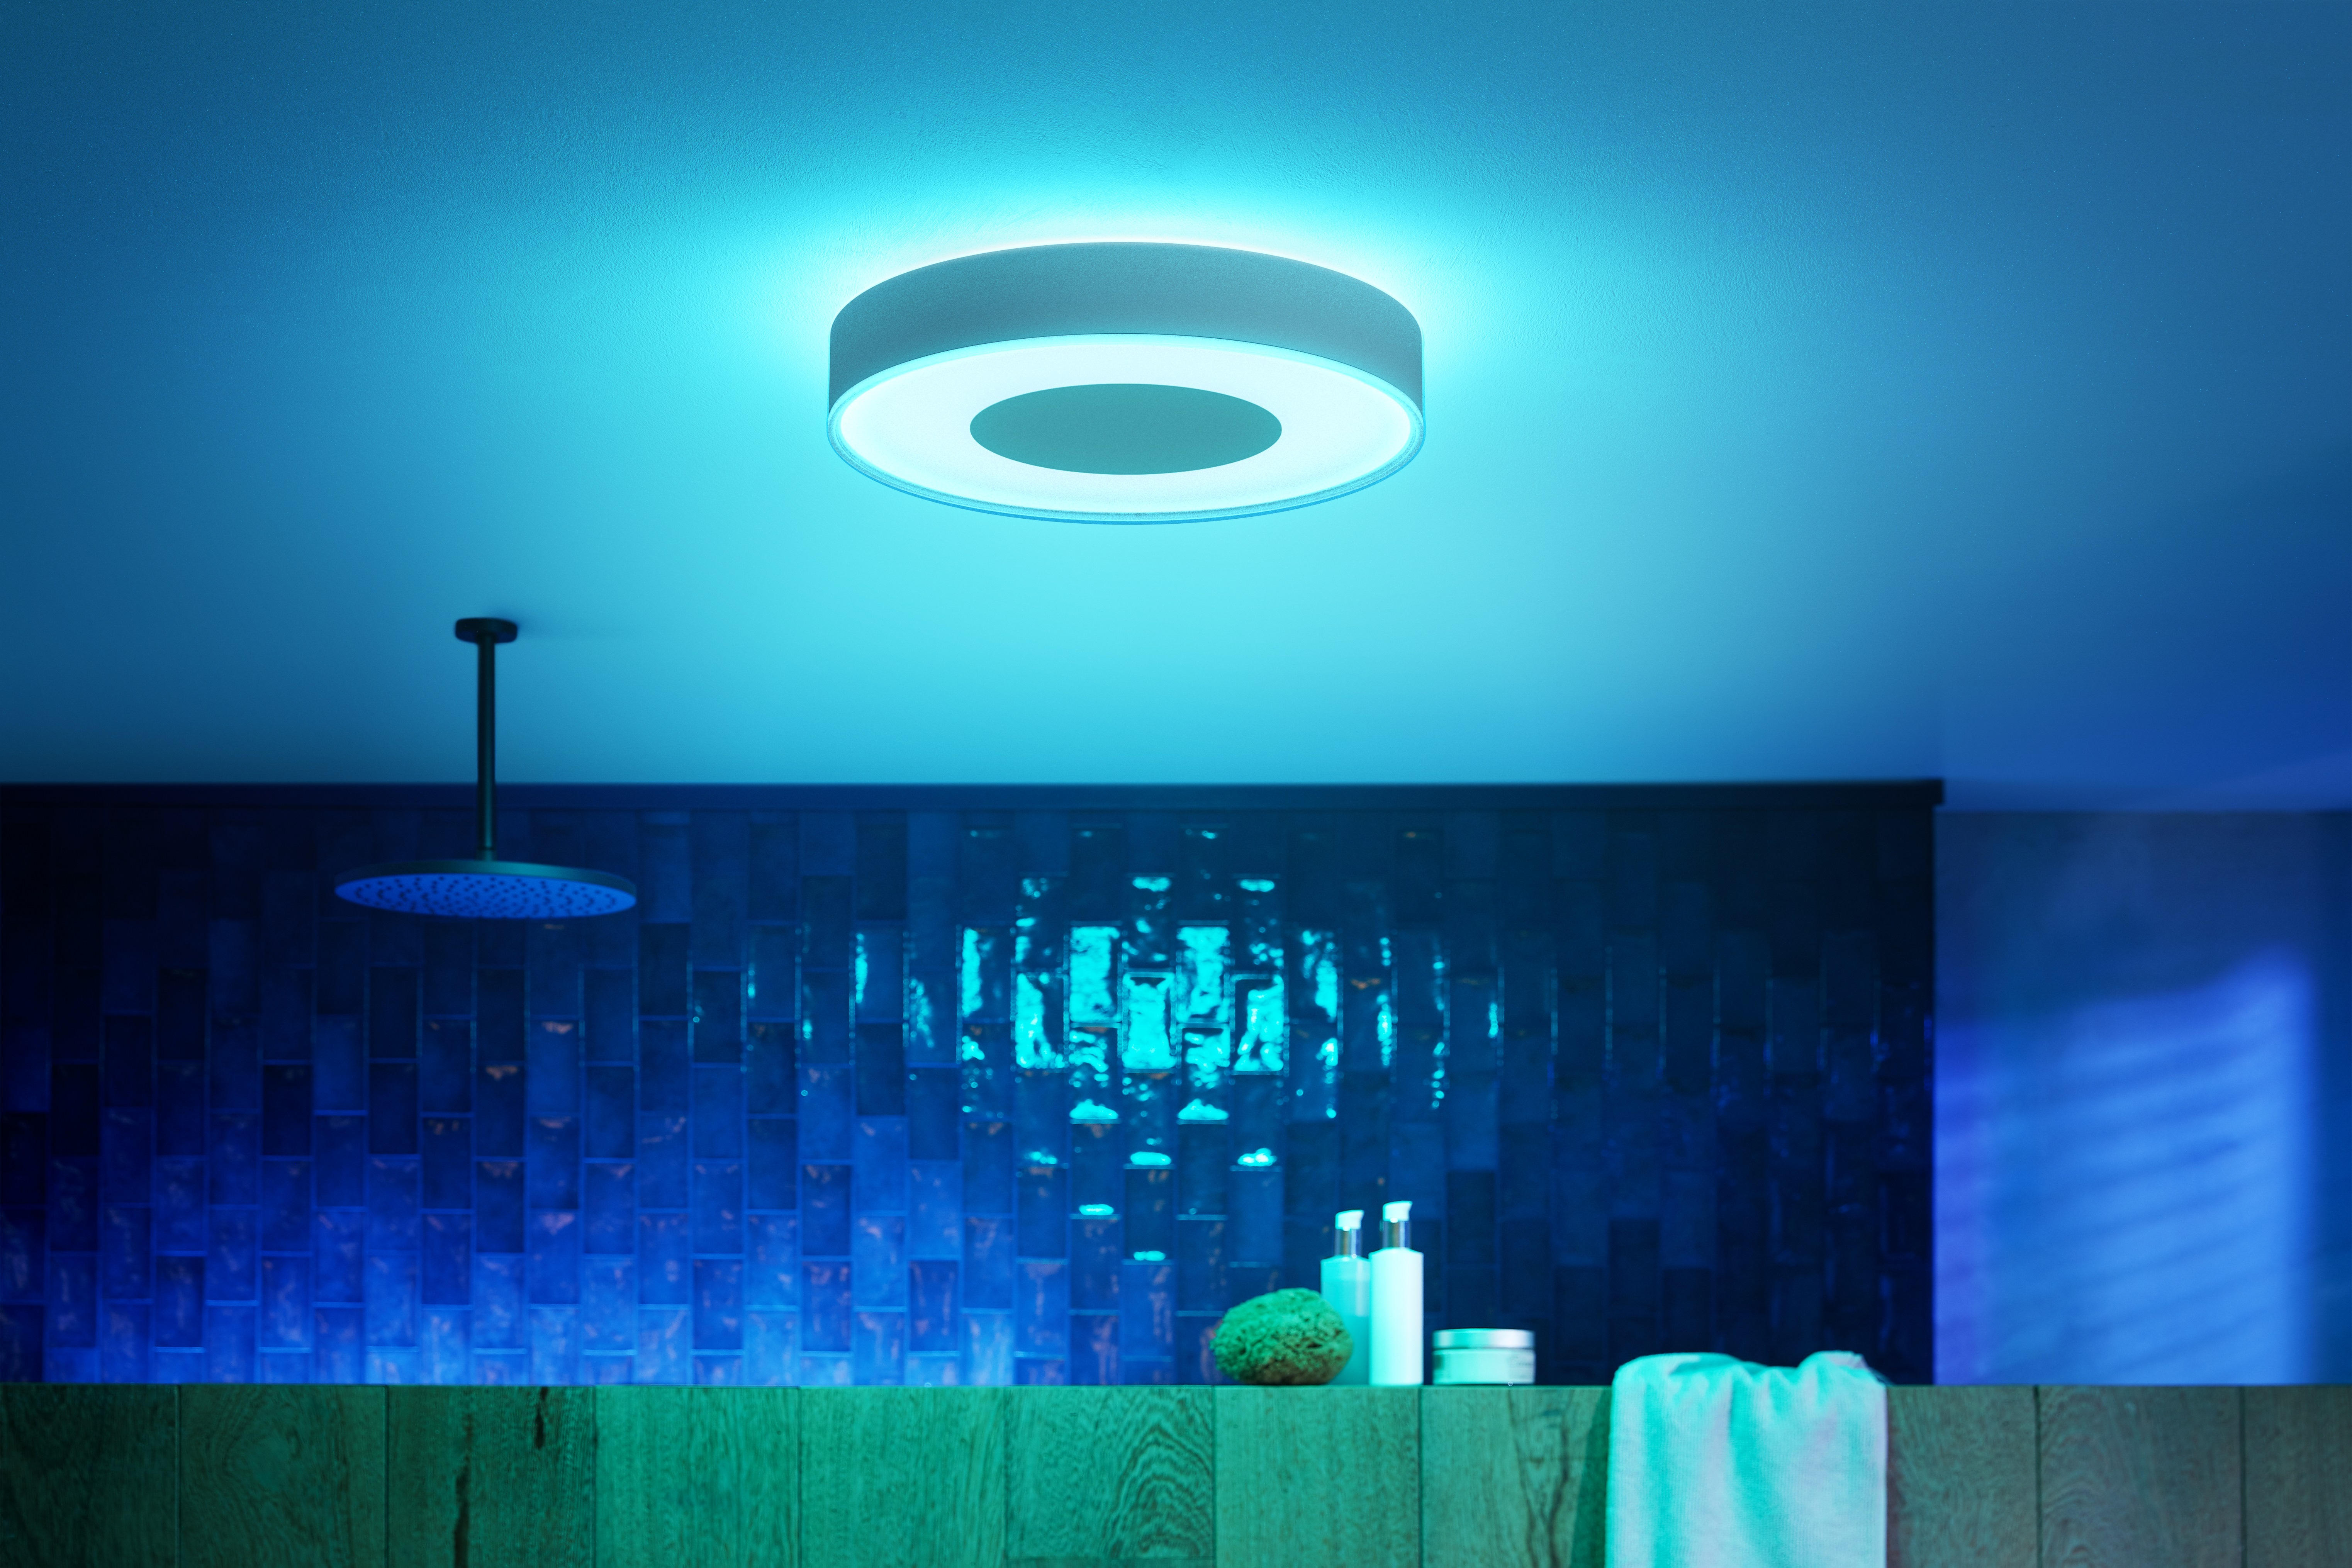 LED-DECKENLEUCHTE 42,5/8,4 cm    - Weiß, Design, Kunststoff/Metall (42,5/8,4cm) - Philips HUE